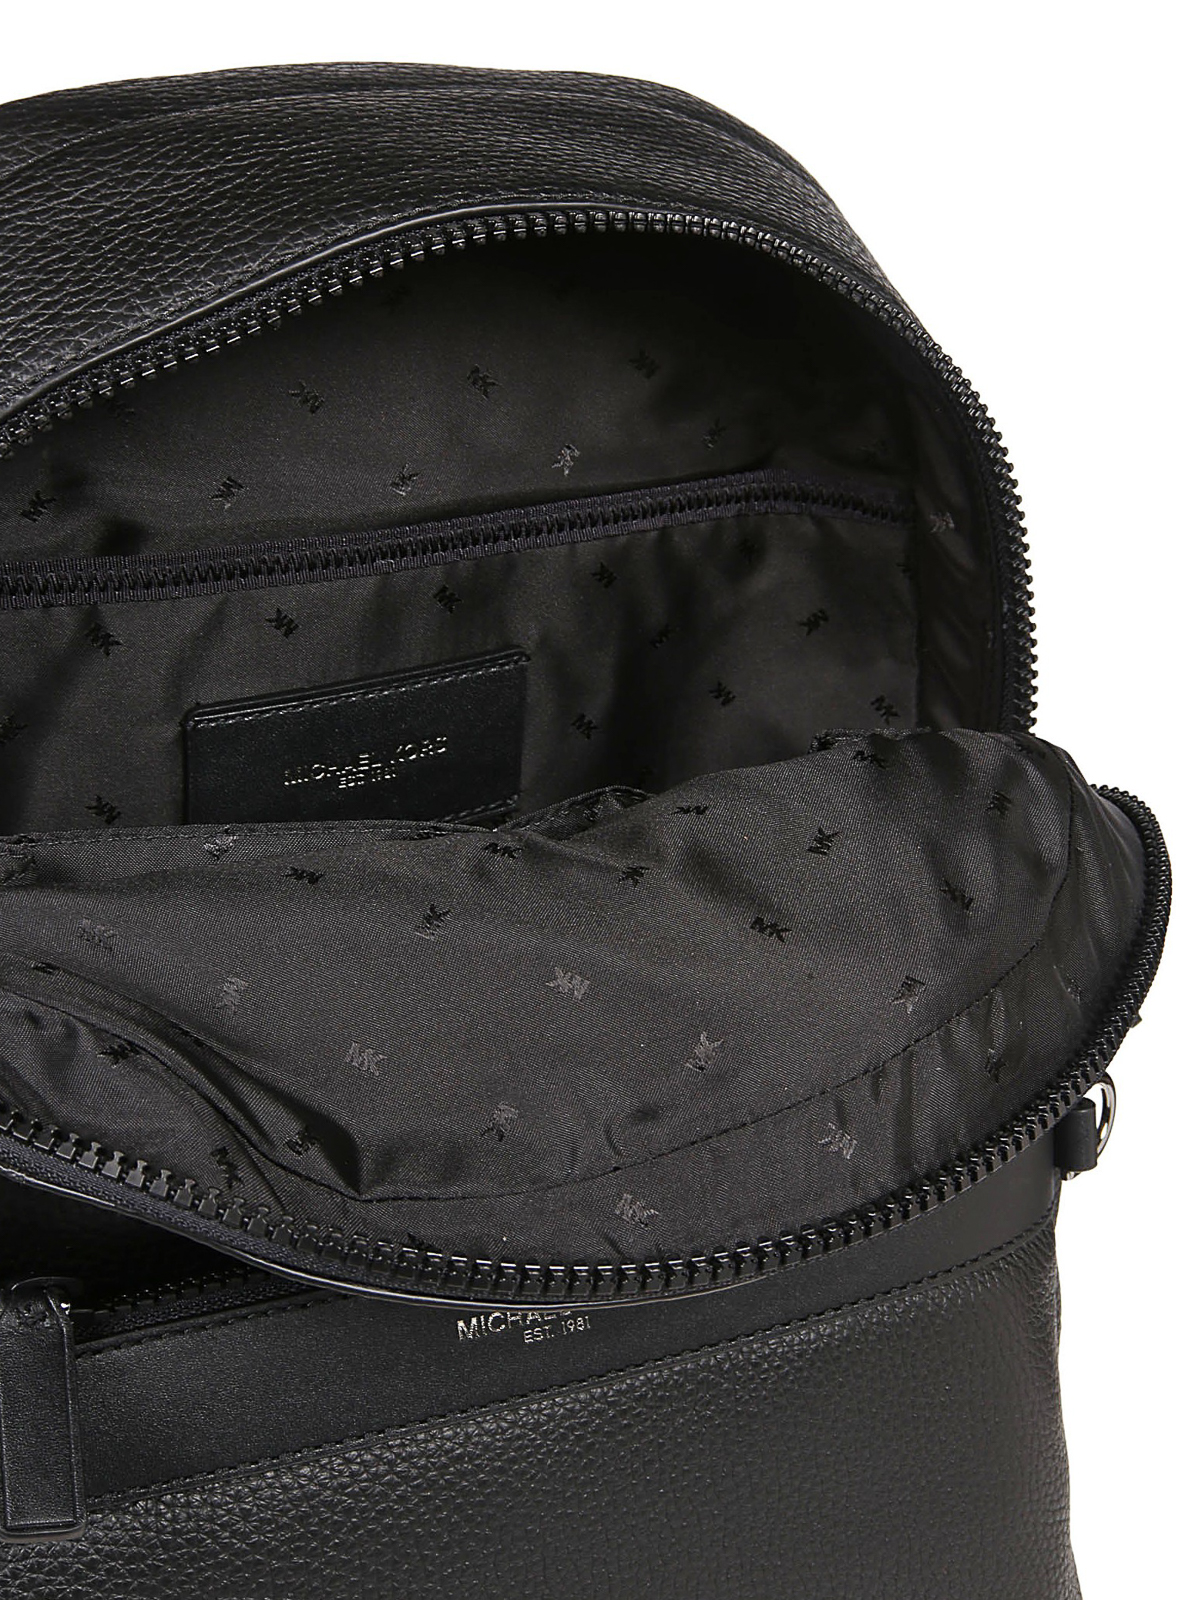 Backpacks Michael Kors  Greyson eco leather backpack  33F9LGYB2O502